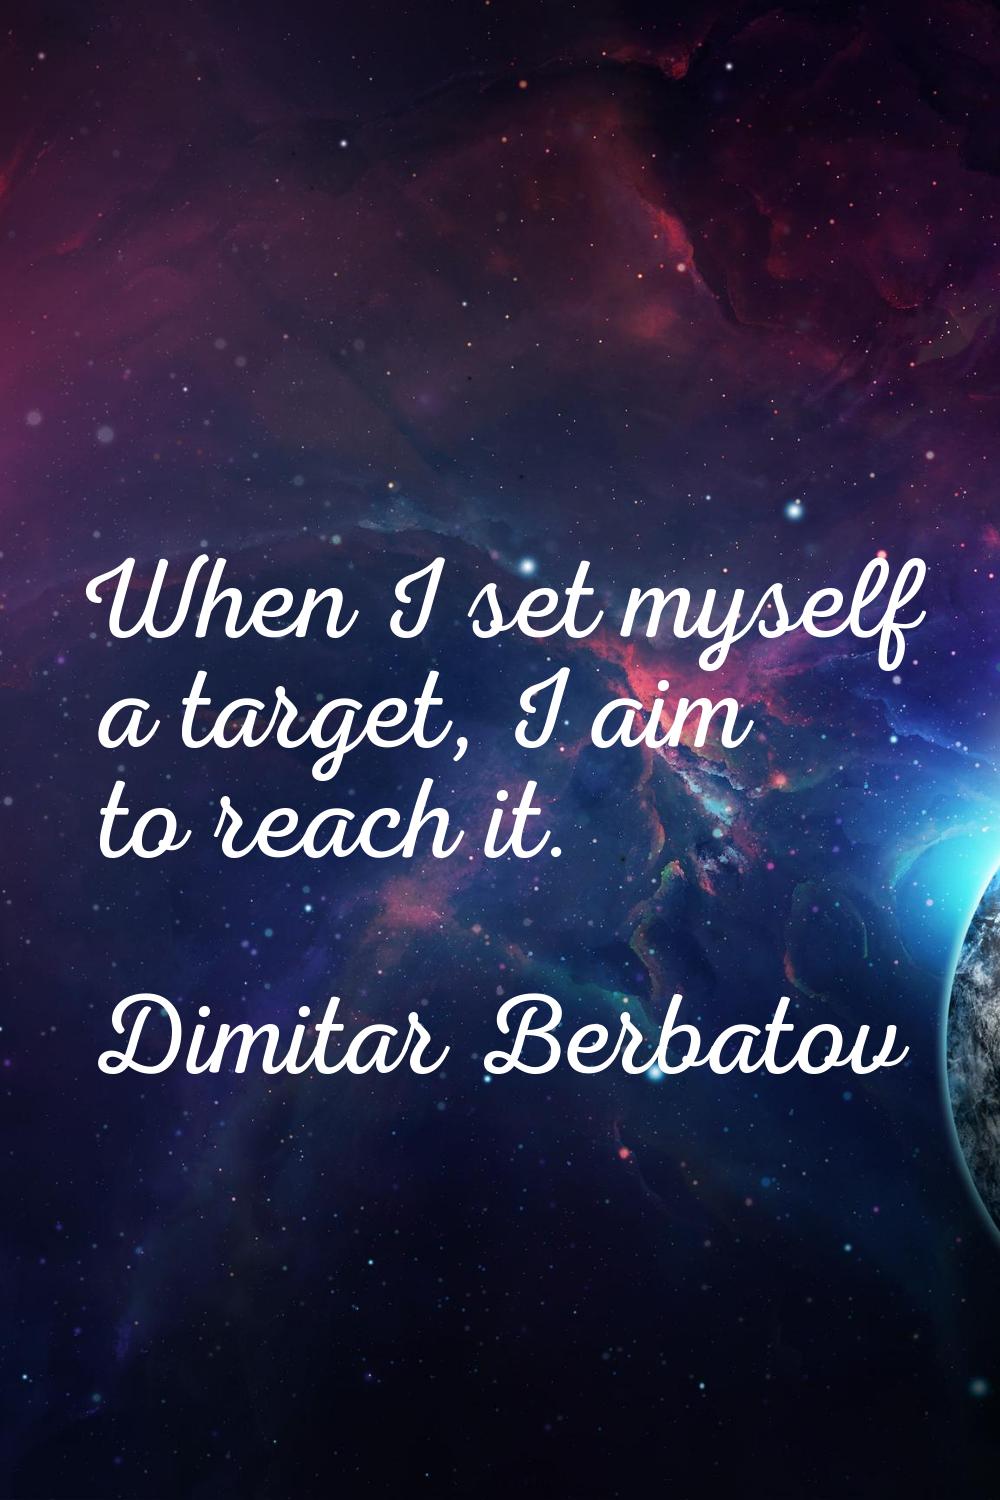 When I set myself a target, I aim to reach it.